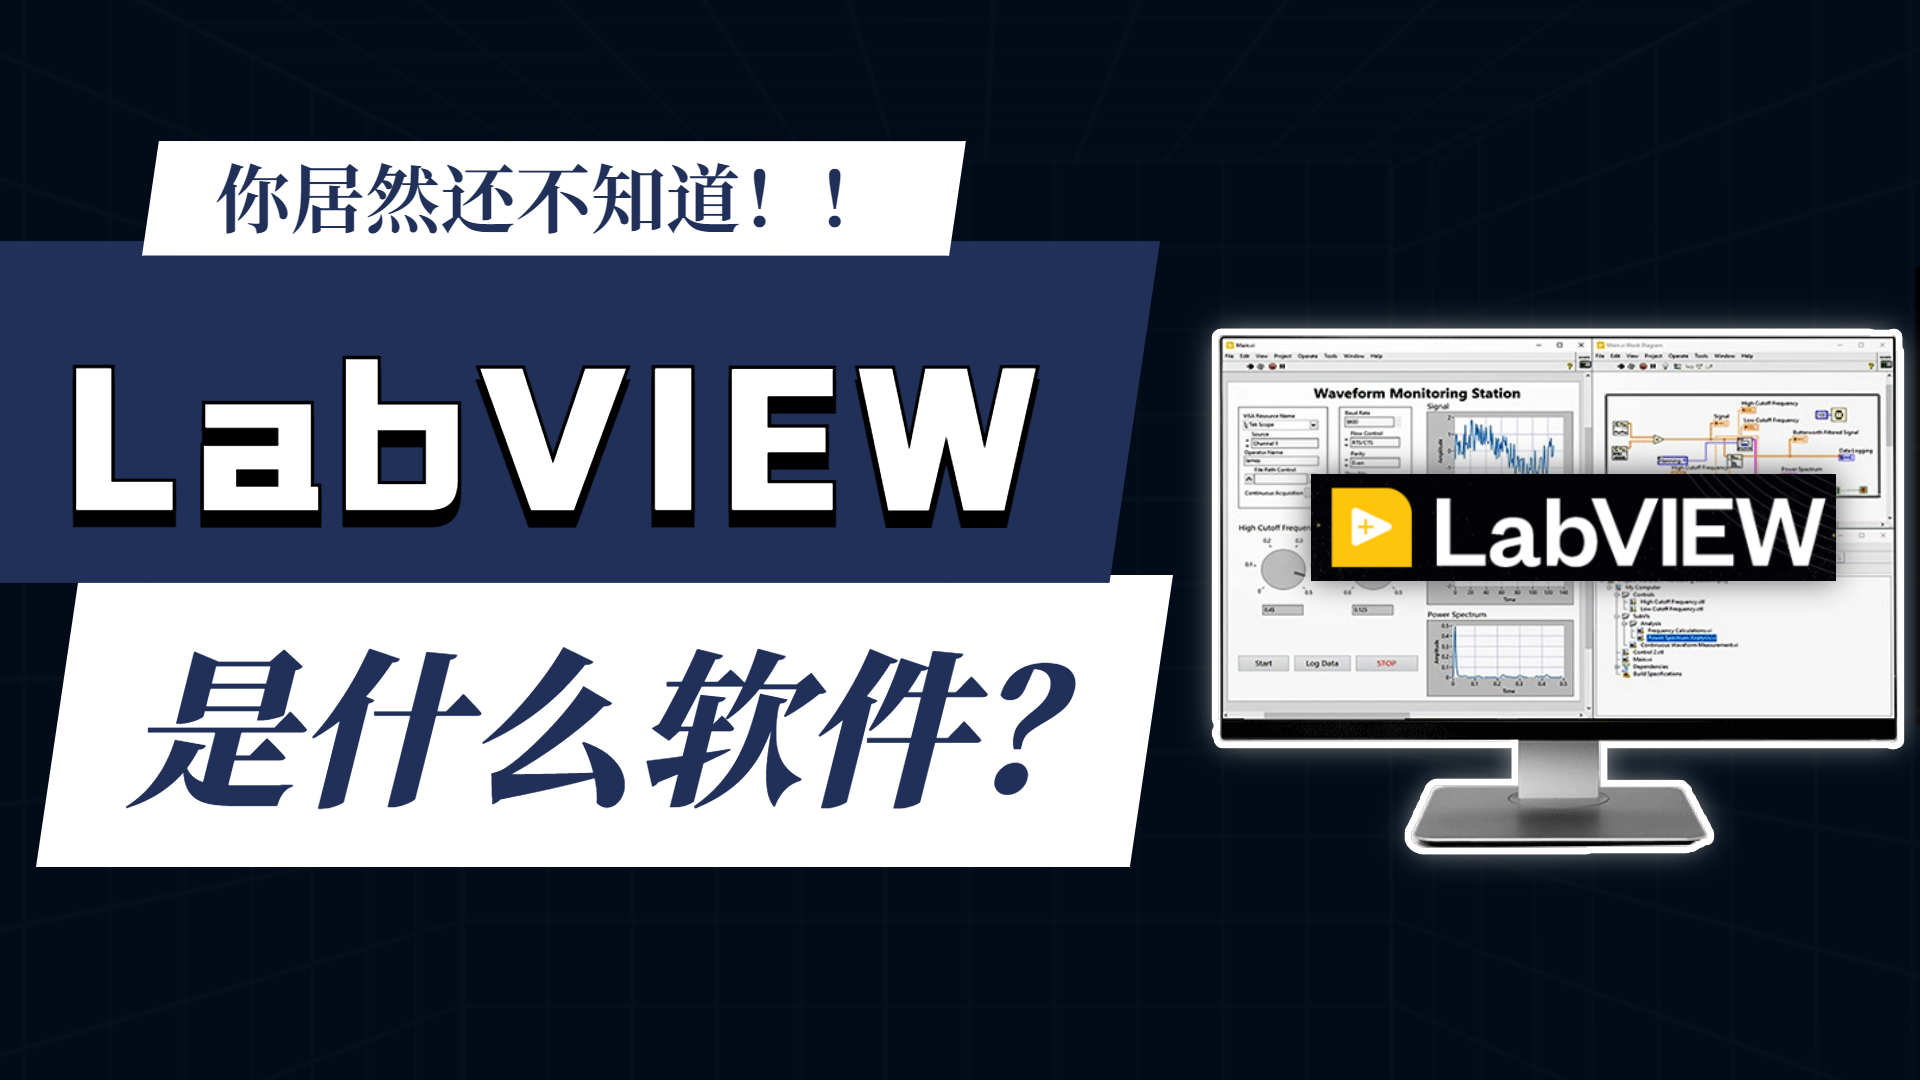 LabVIEW是什么?#Labview #LABVIEW編程入門(mén) #非標自動(dòng)化控制 